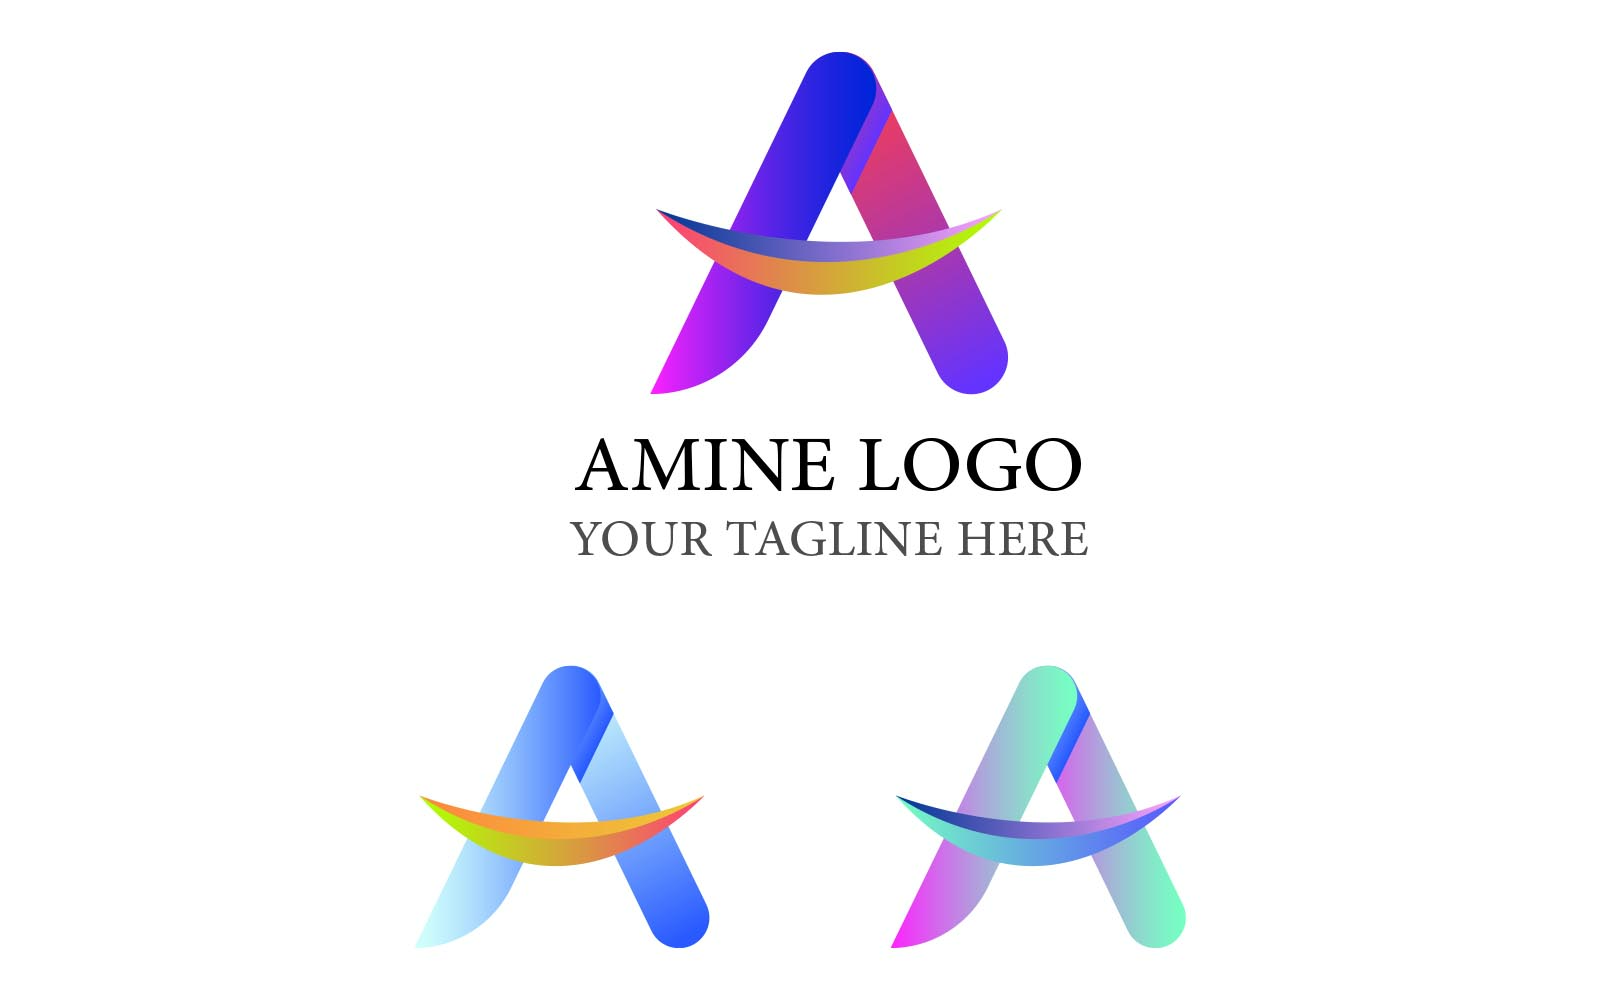 Amine Logo - Letter A Logo